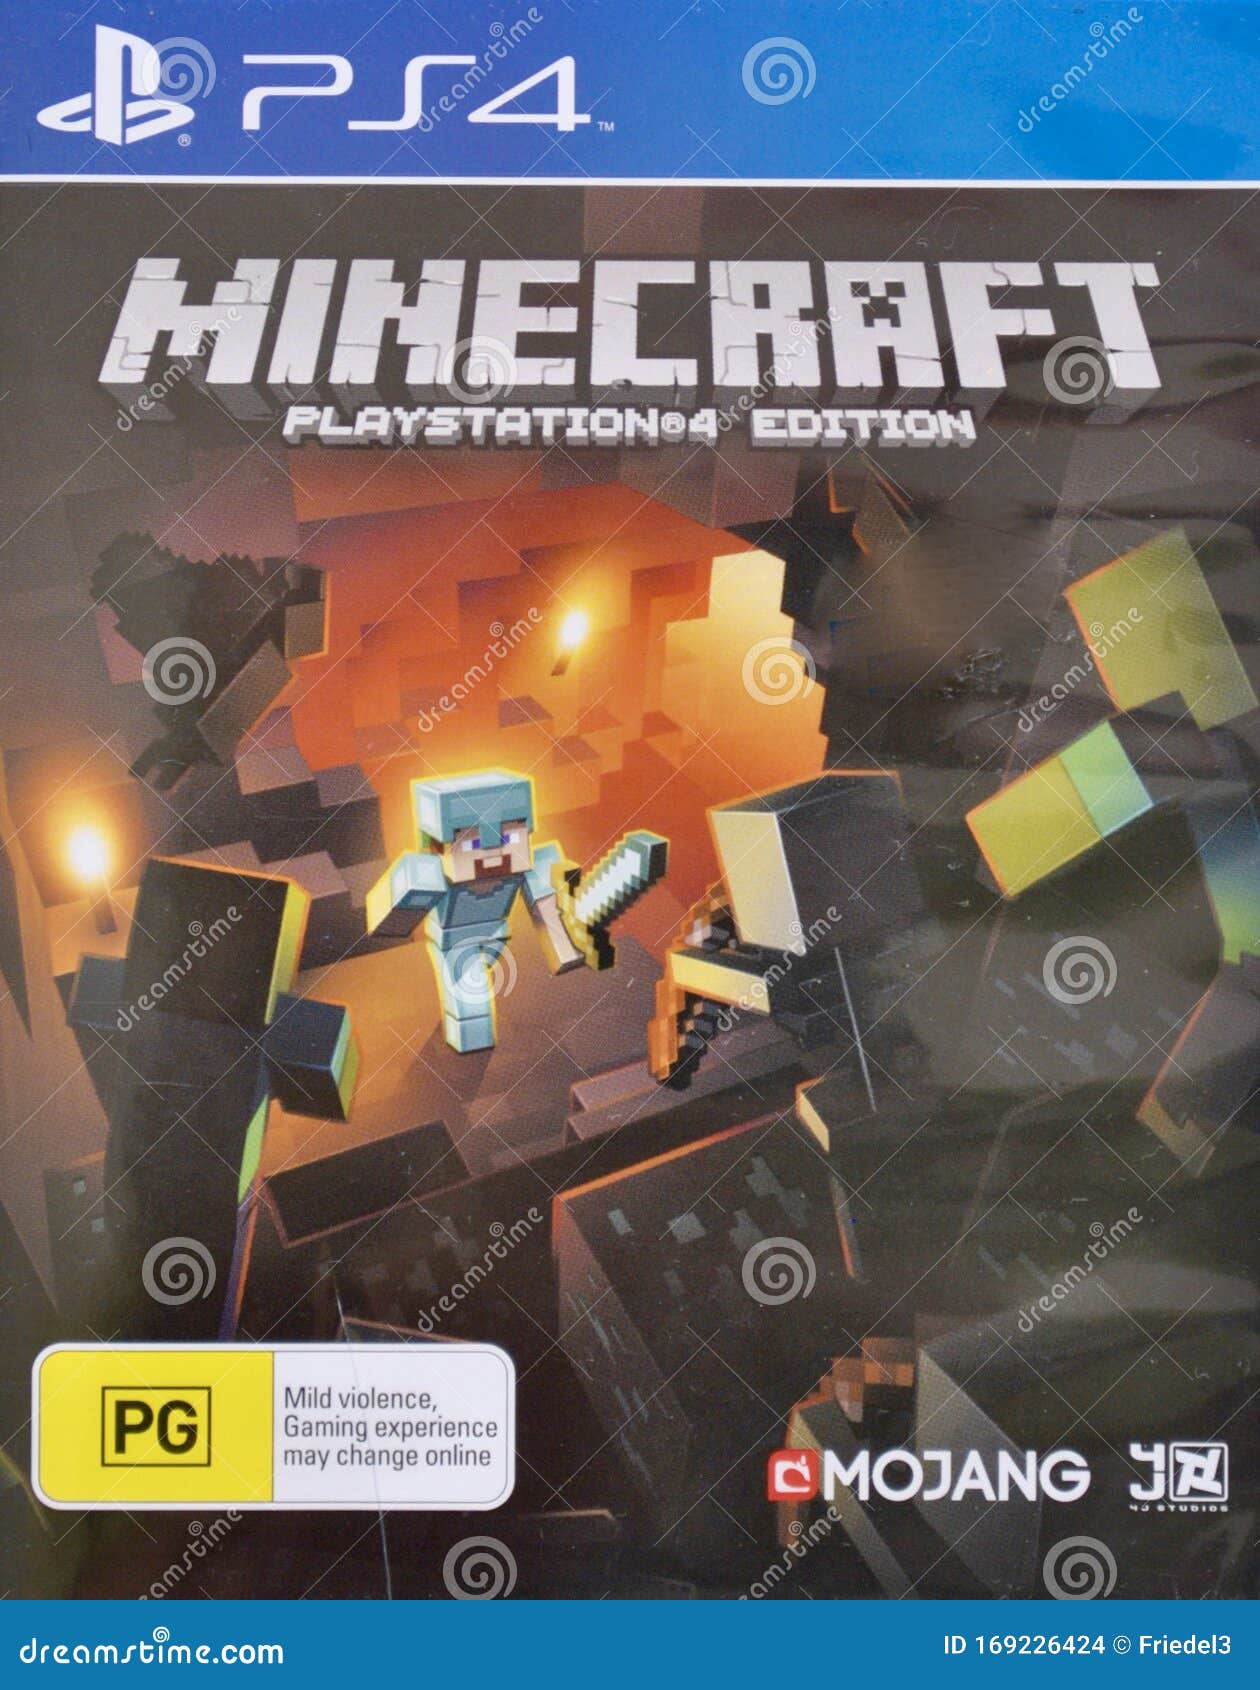 Jogo Minecraft - PS4